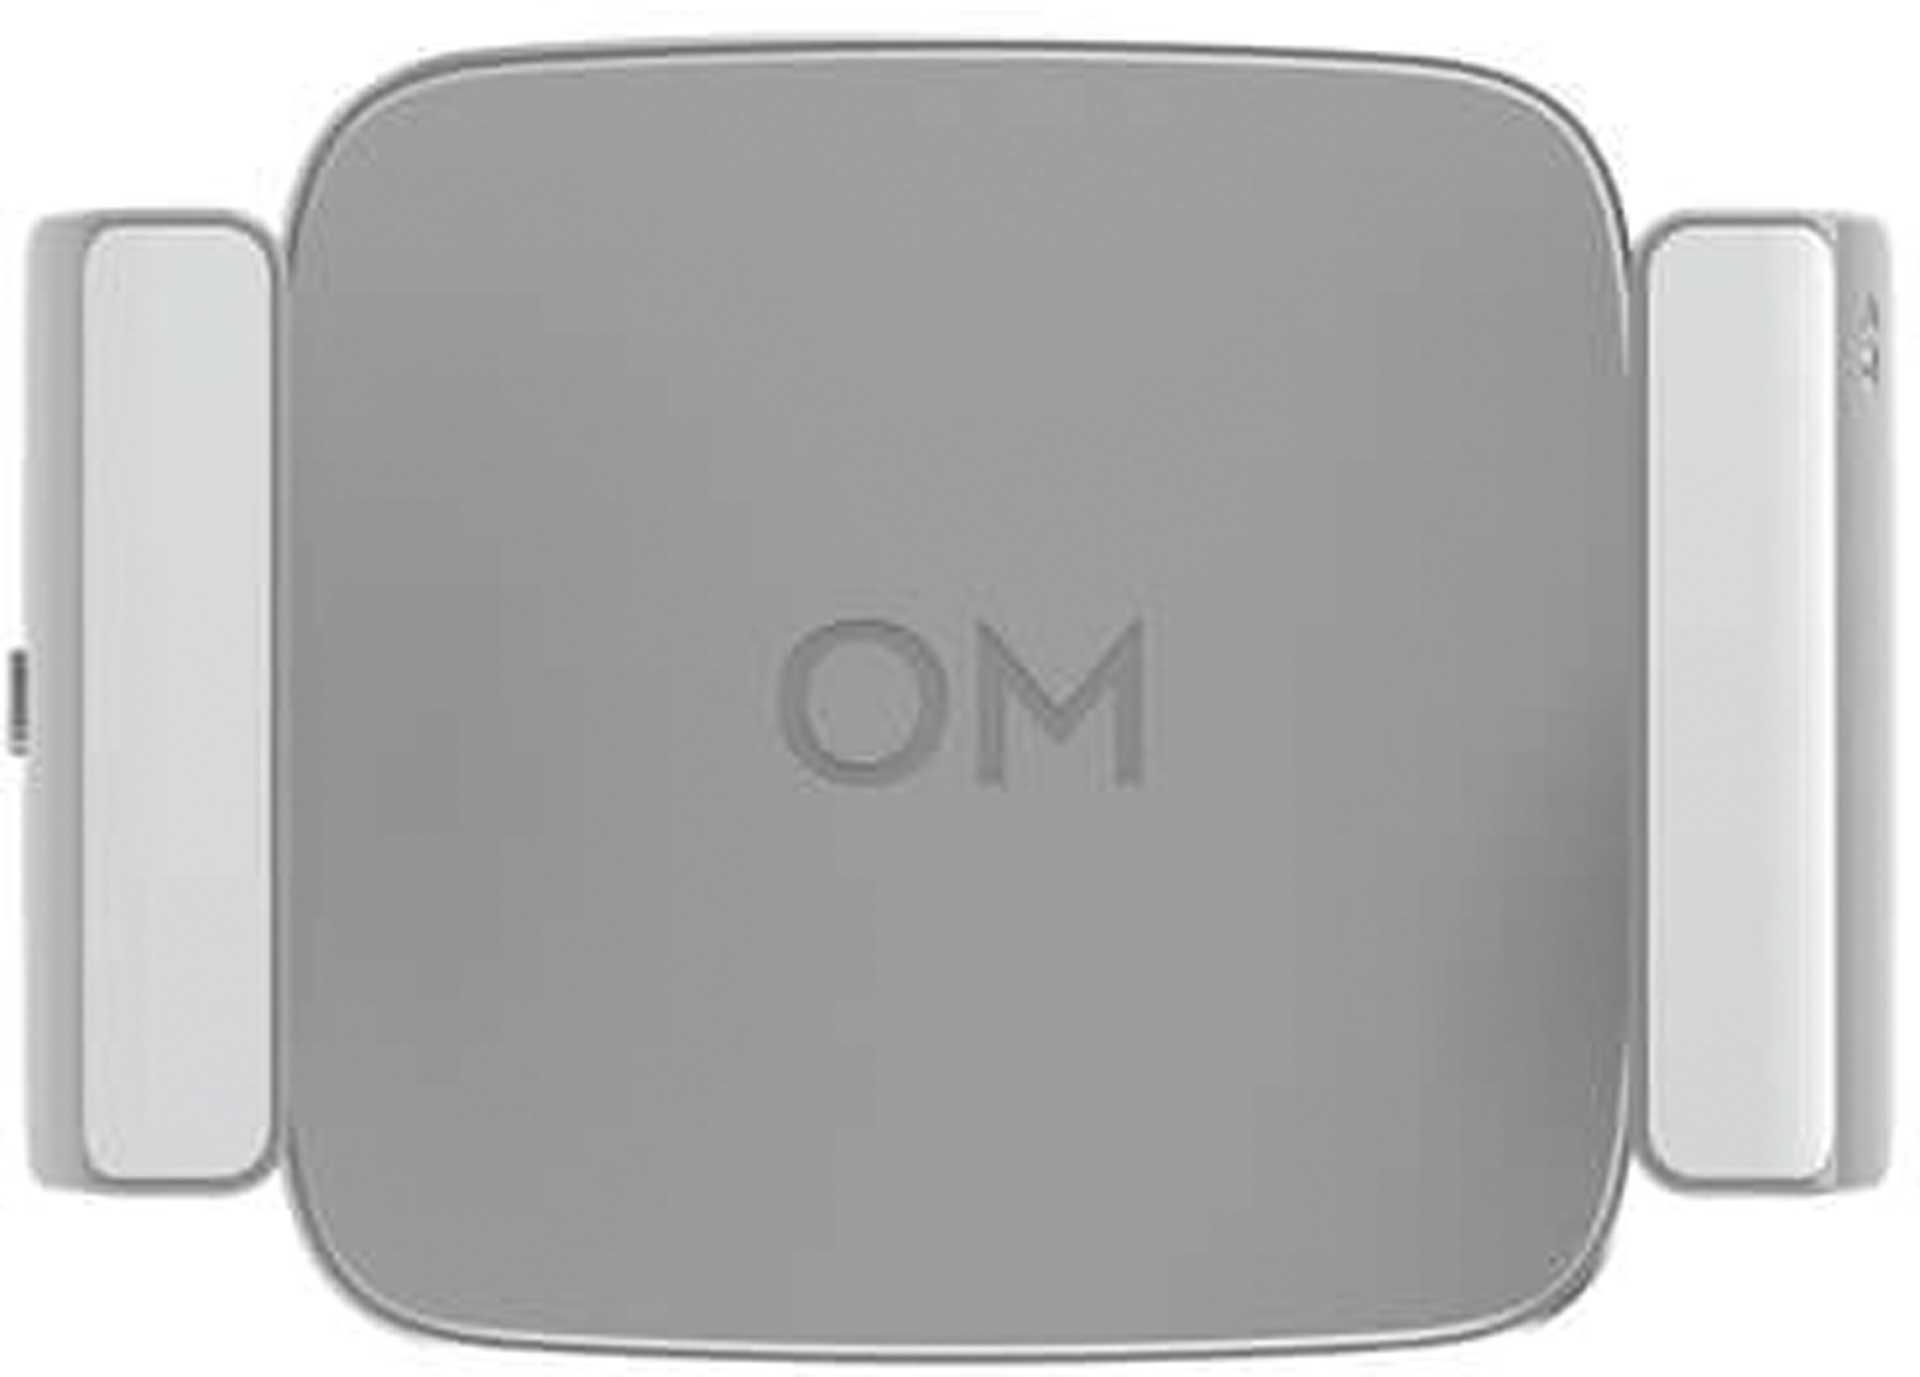 DJI OM - Smartphone terminal with light